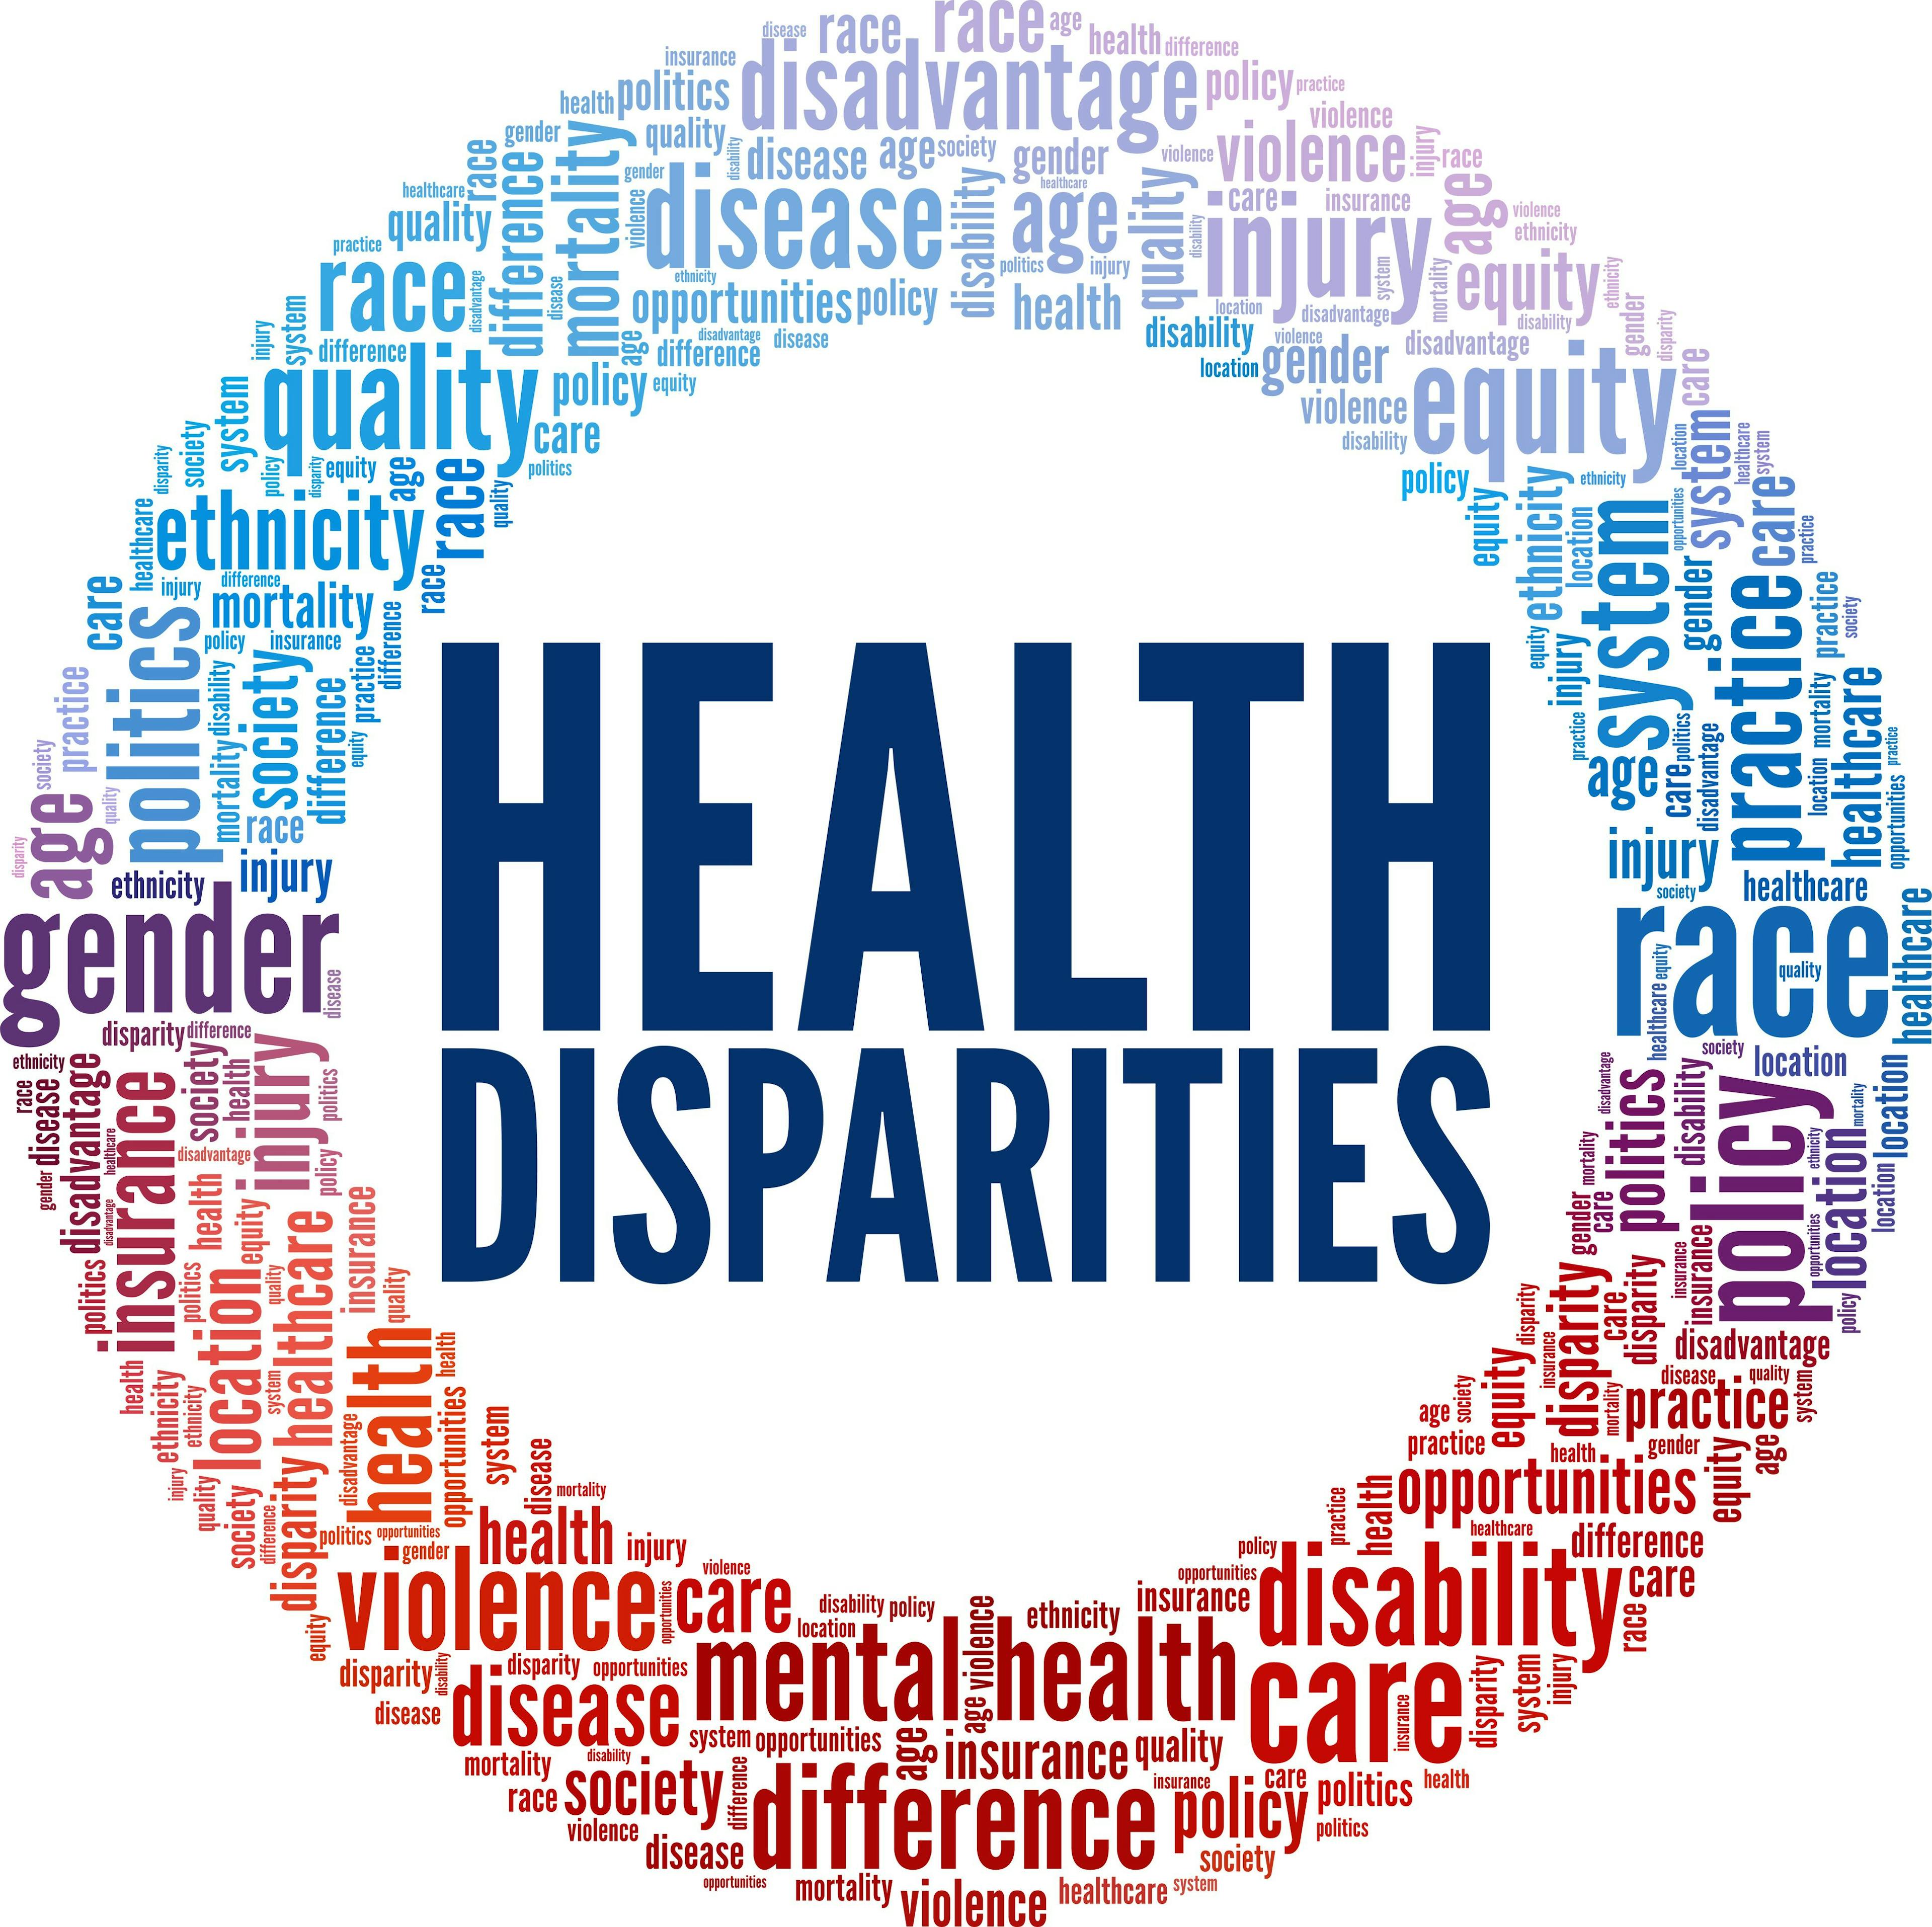 Health Disparities Poster | image credit: Colored Lights - stock.adobe.com